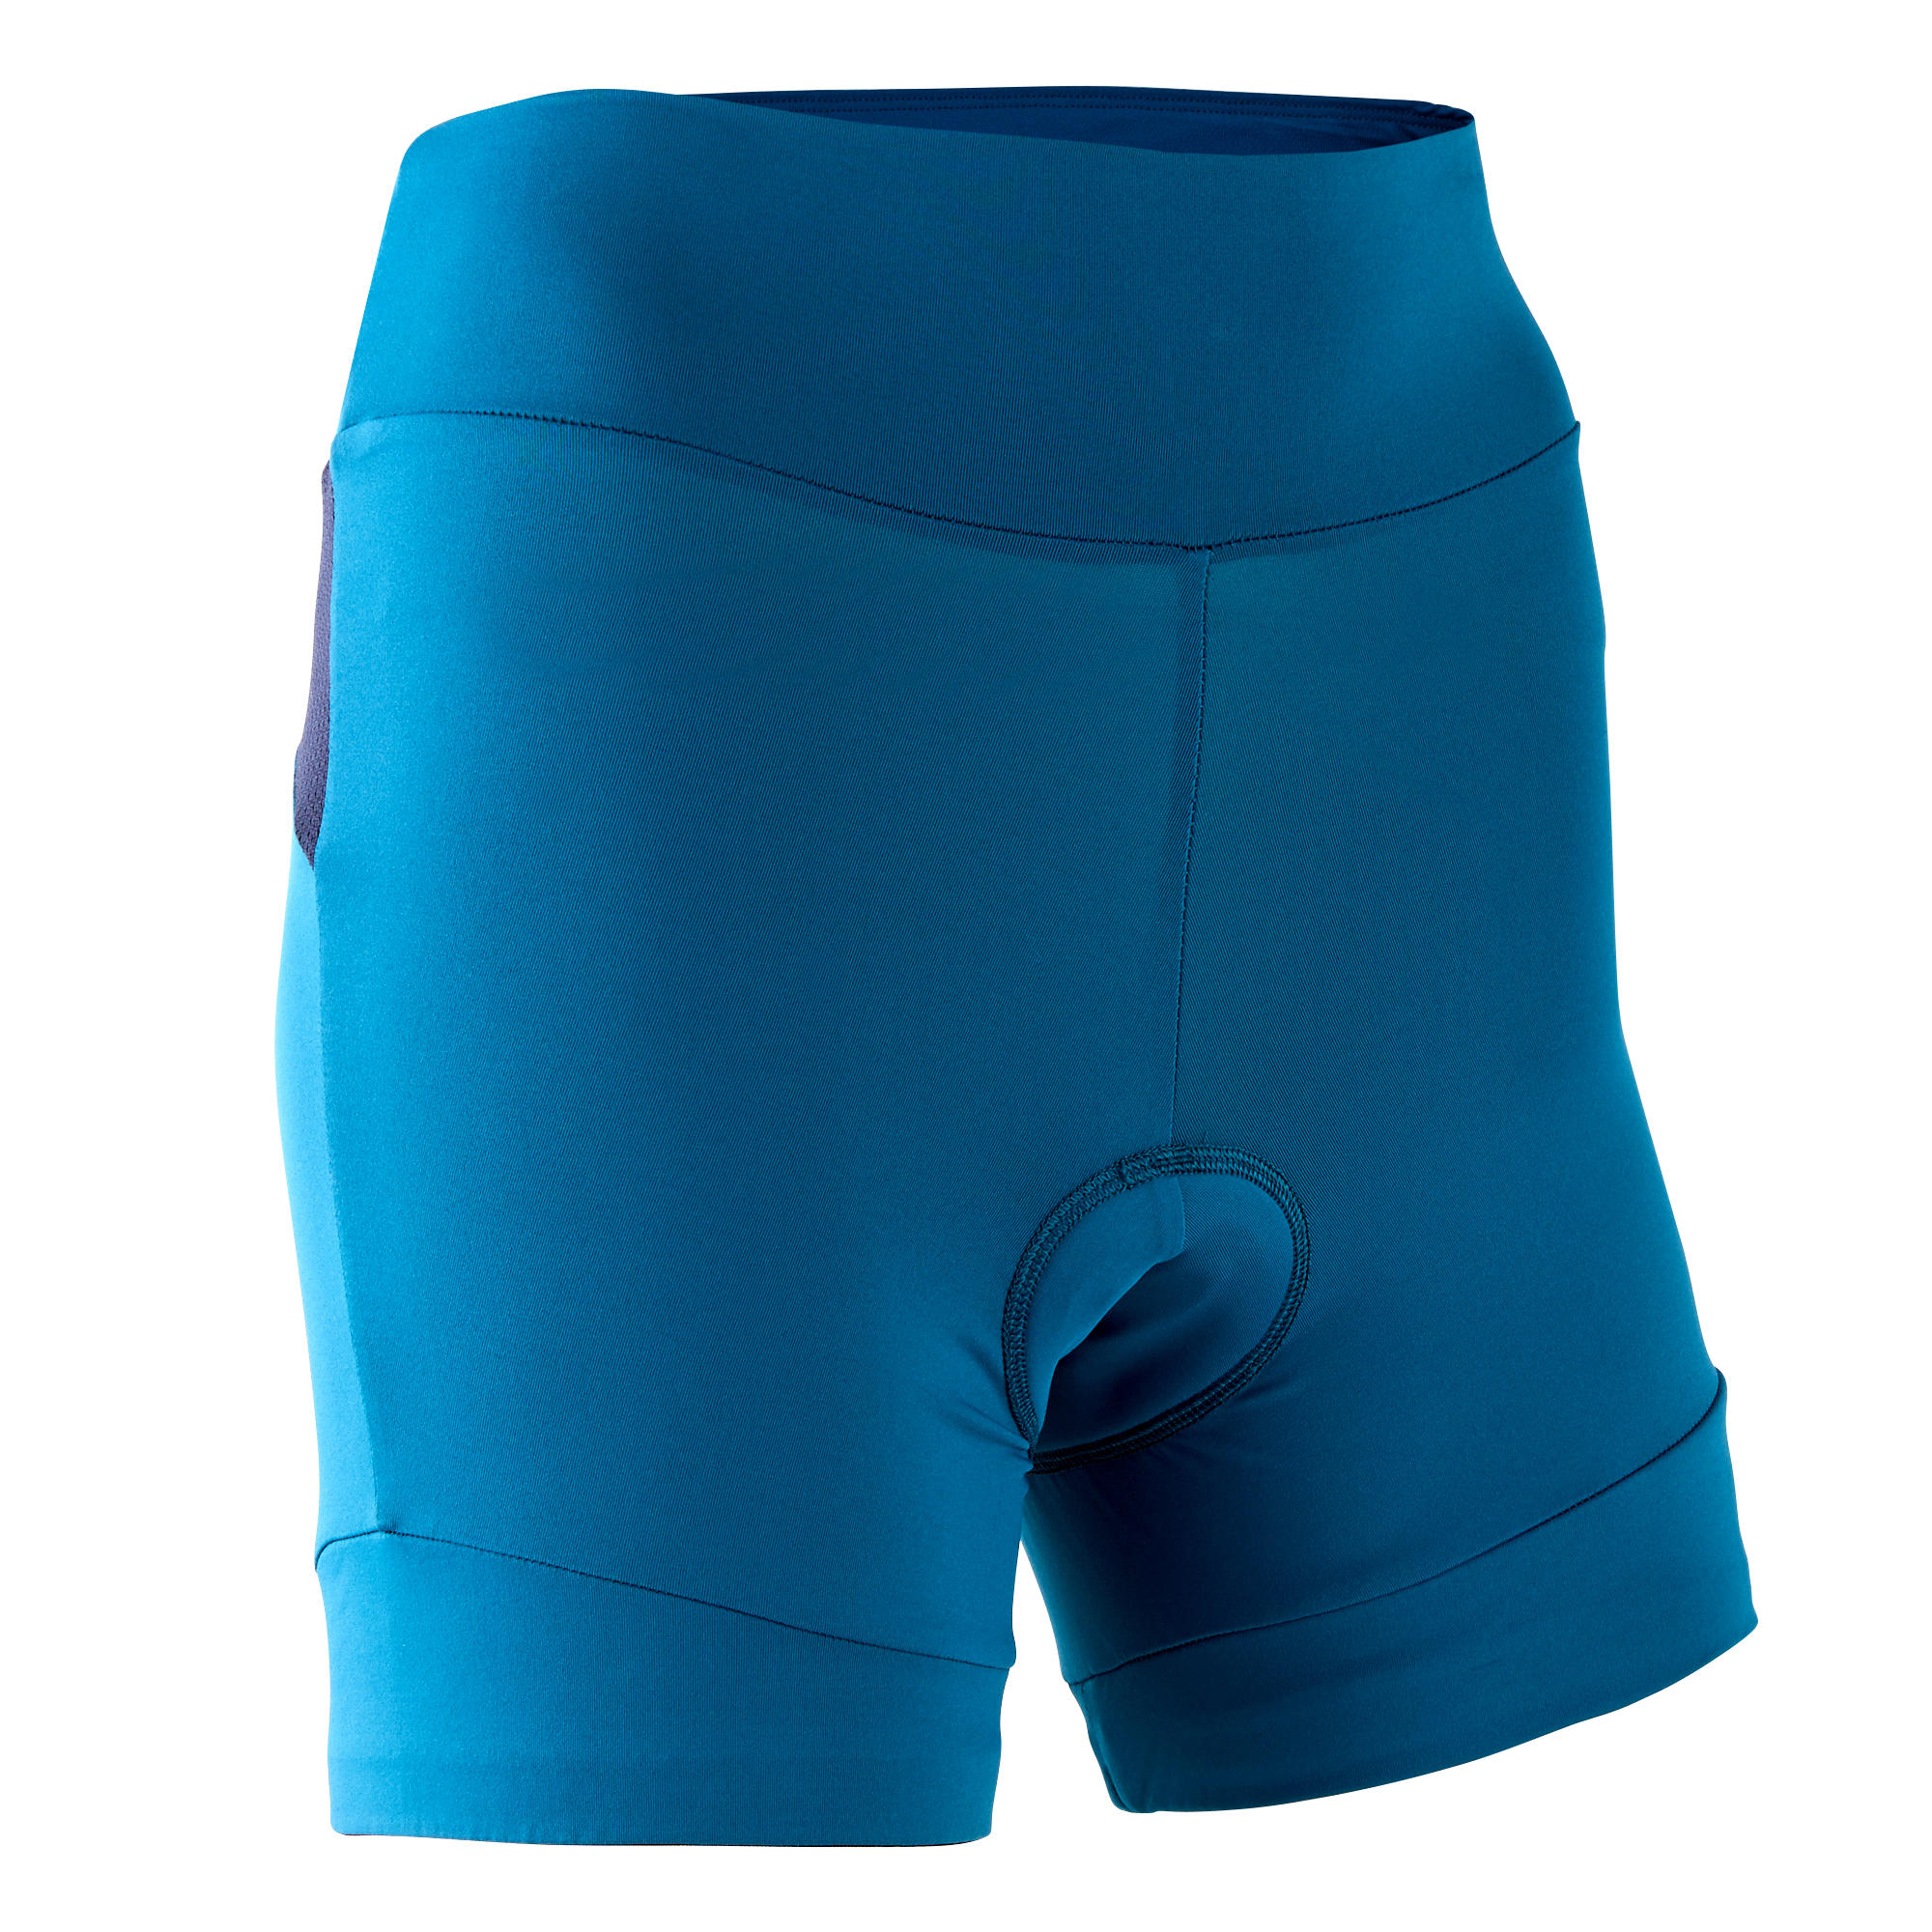 Women's Mountain Bike Shorts ST 500 - Blue 7/11